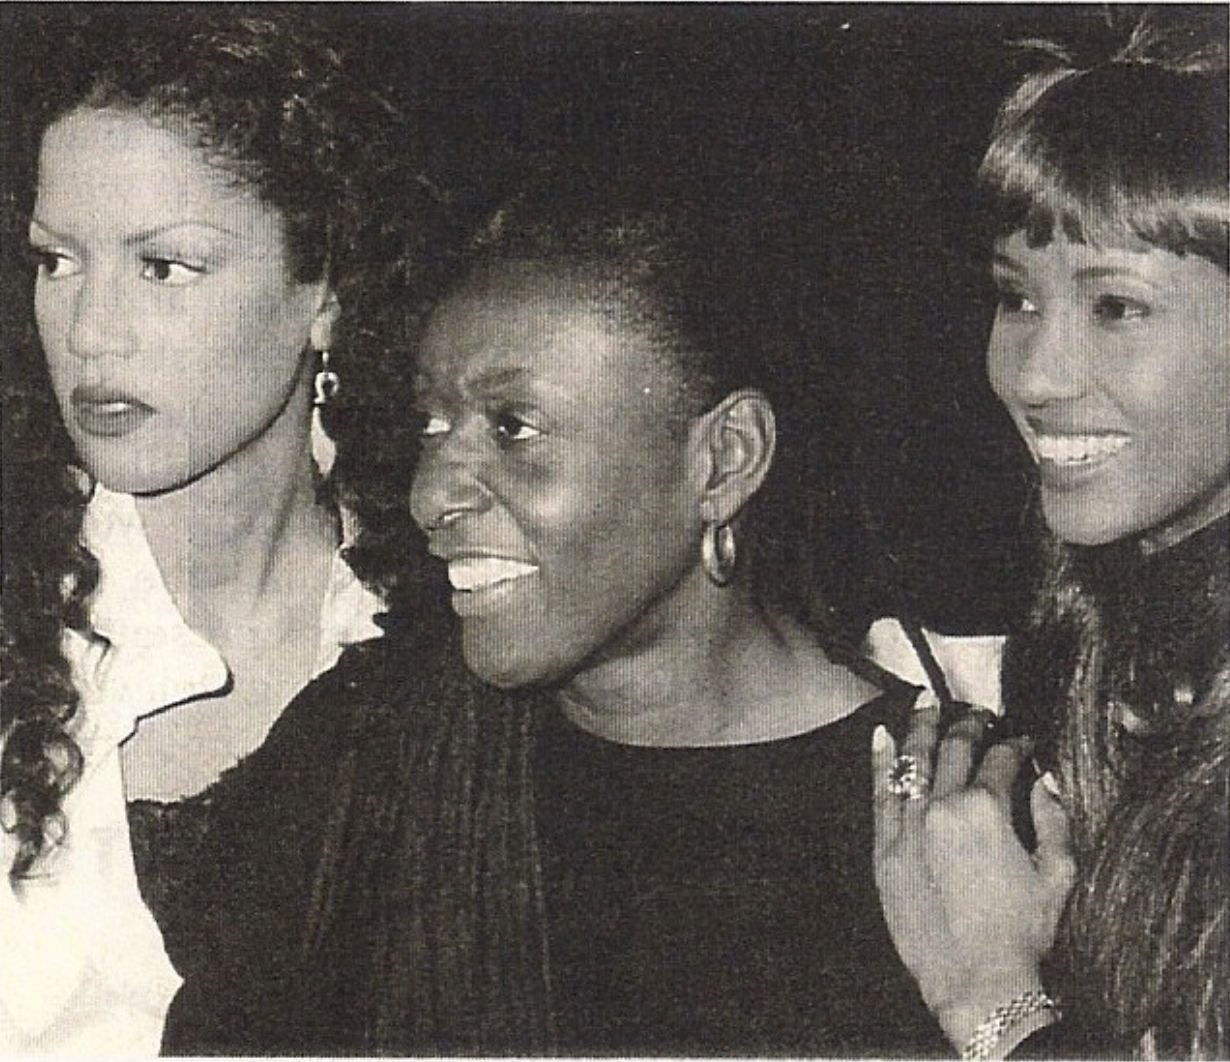 Black Girls Coalition Press Conference, Dec. 1992